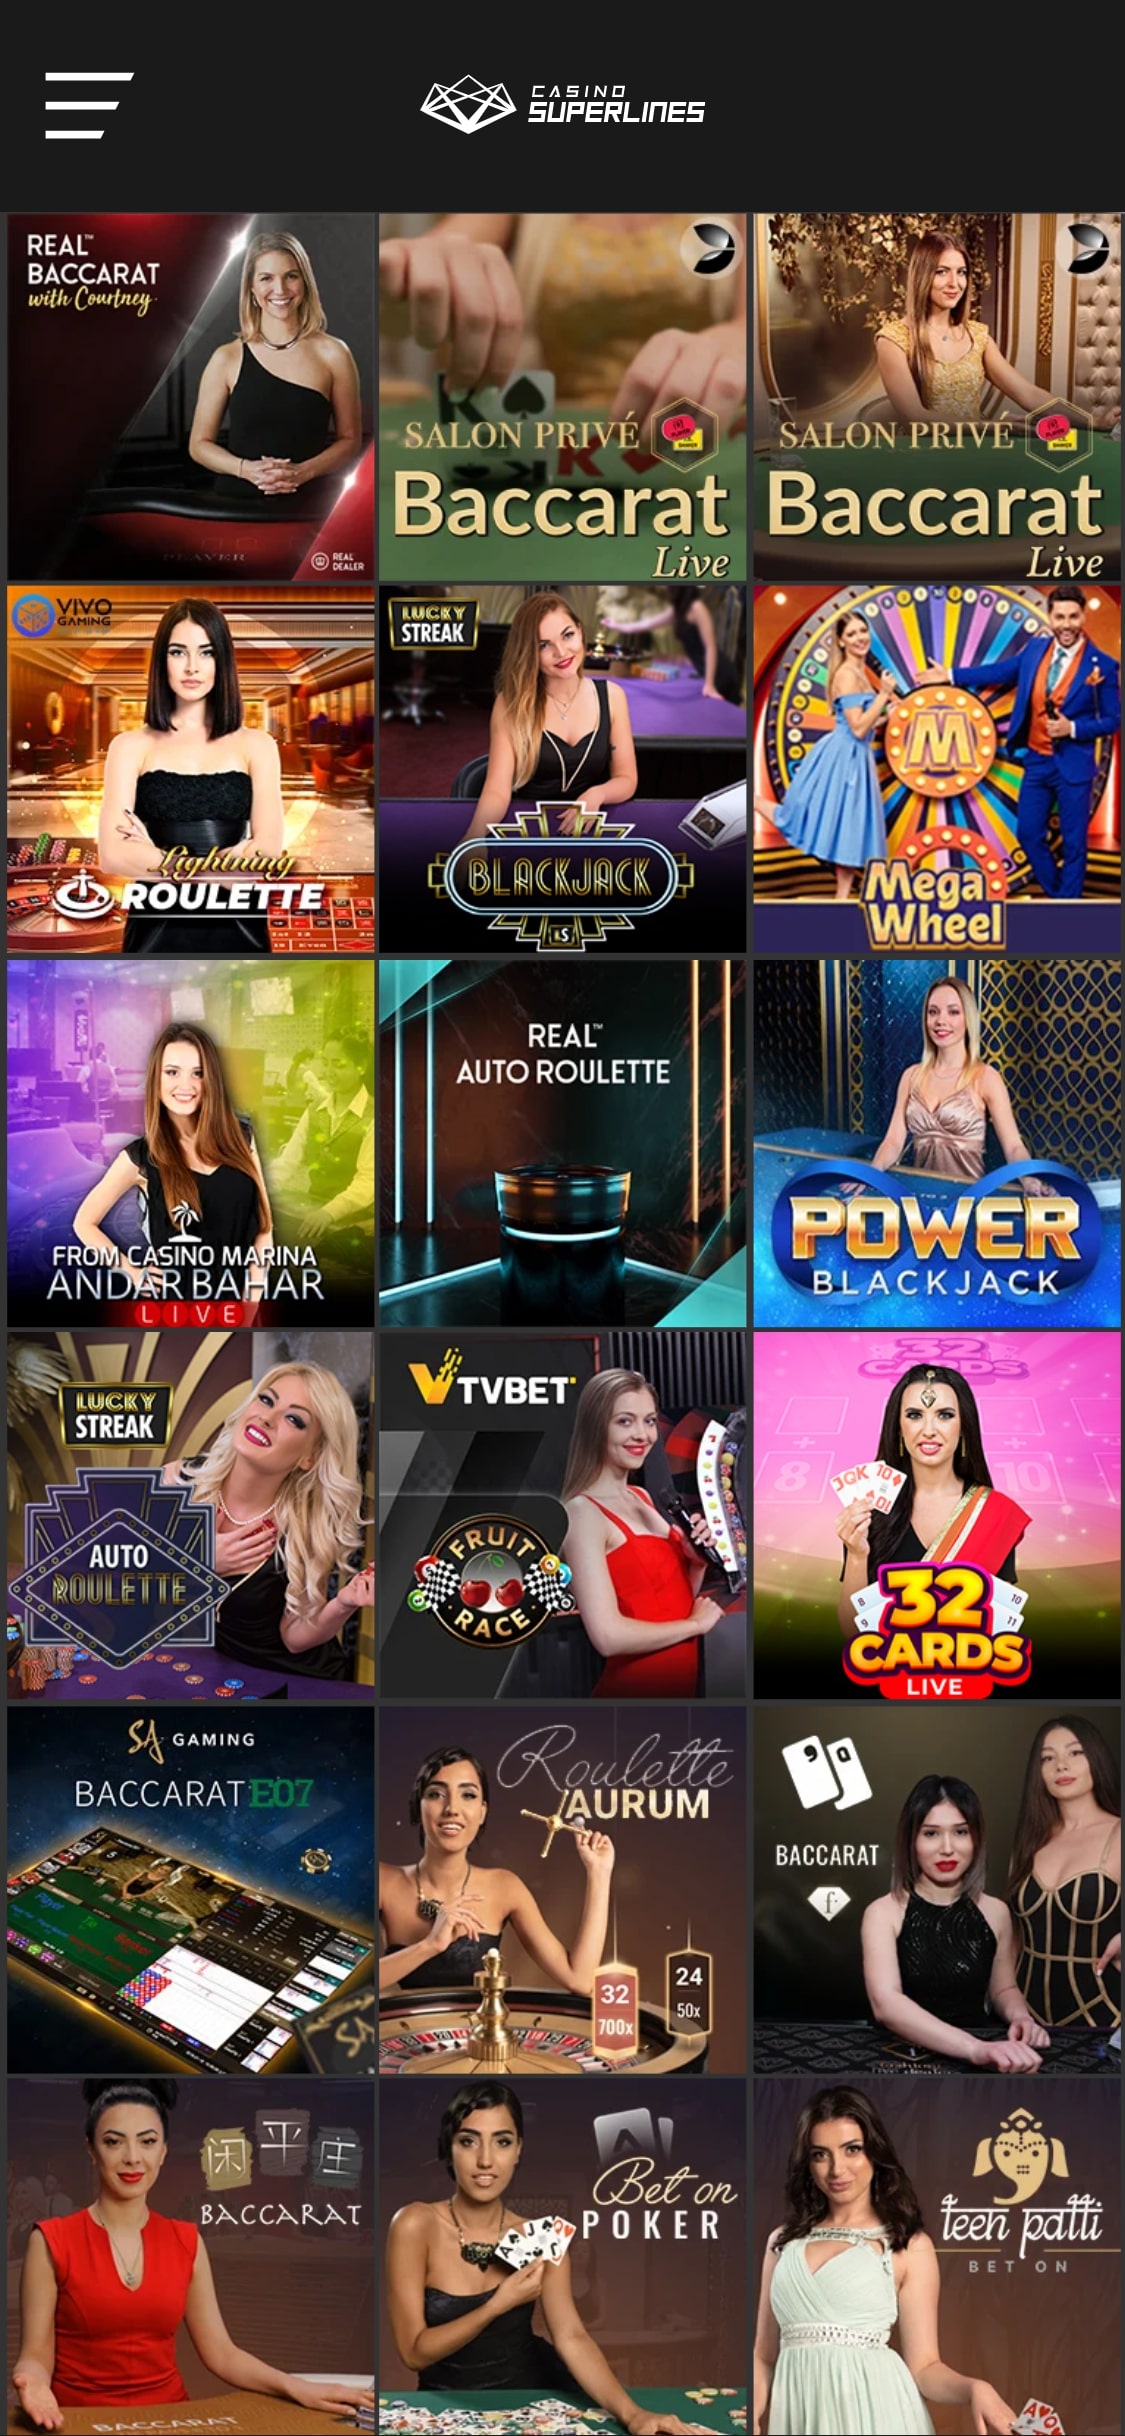 Casino Superlines Mobile Live Dealer Games Review